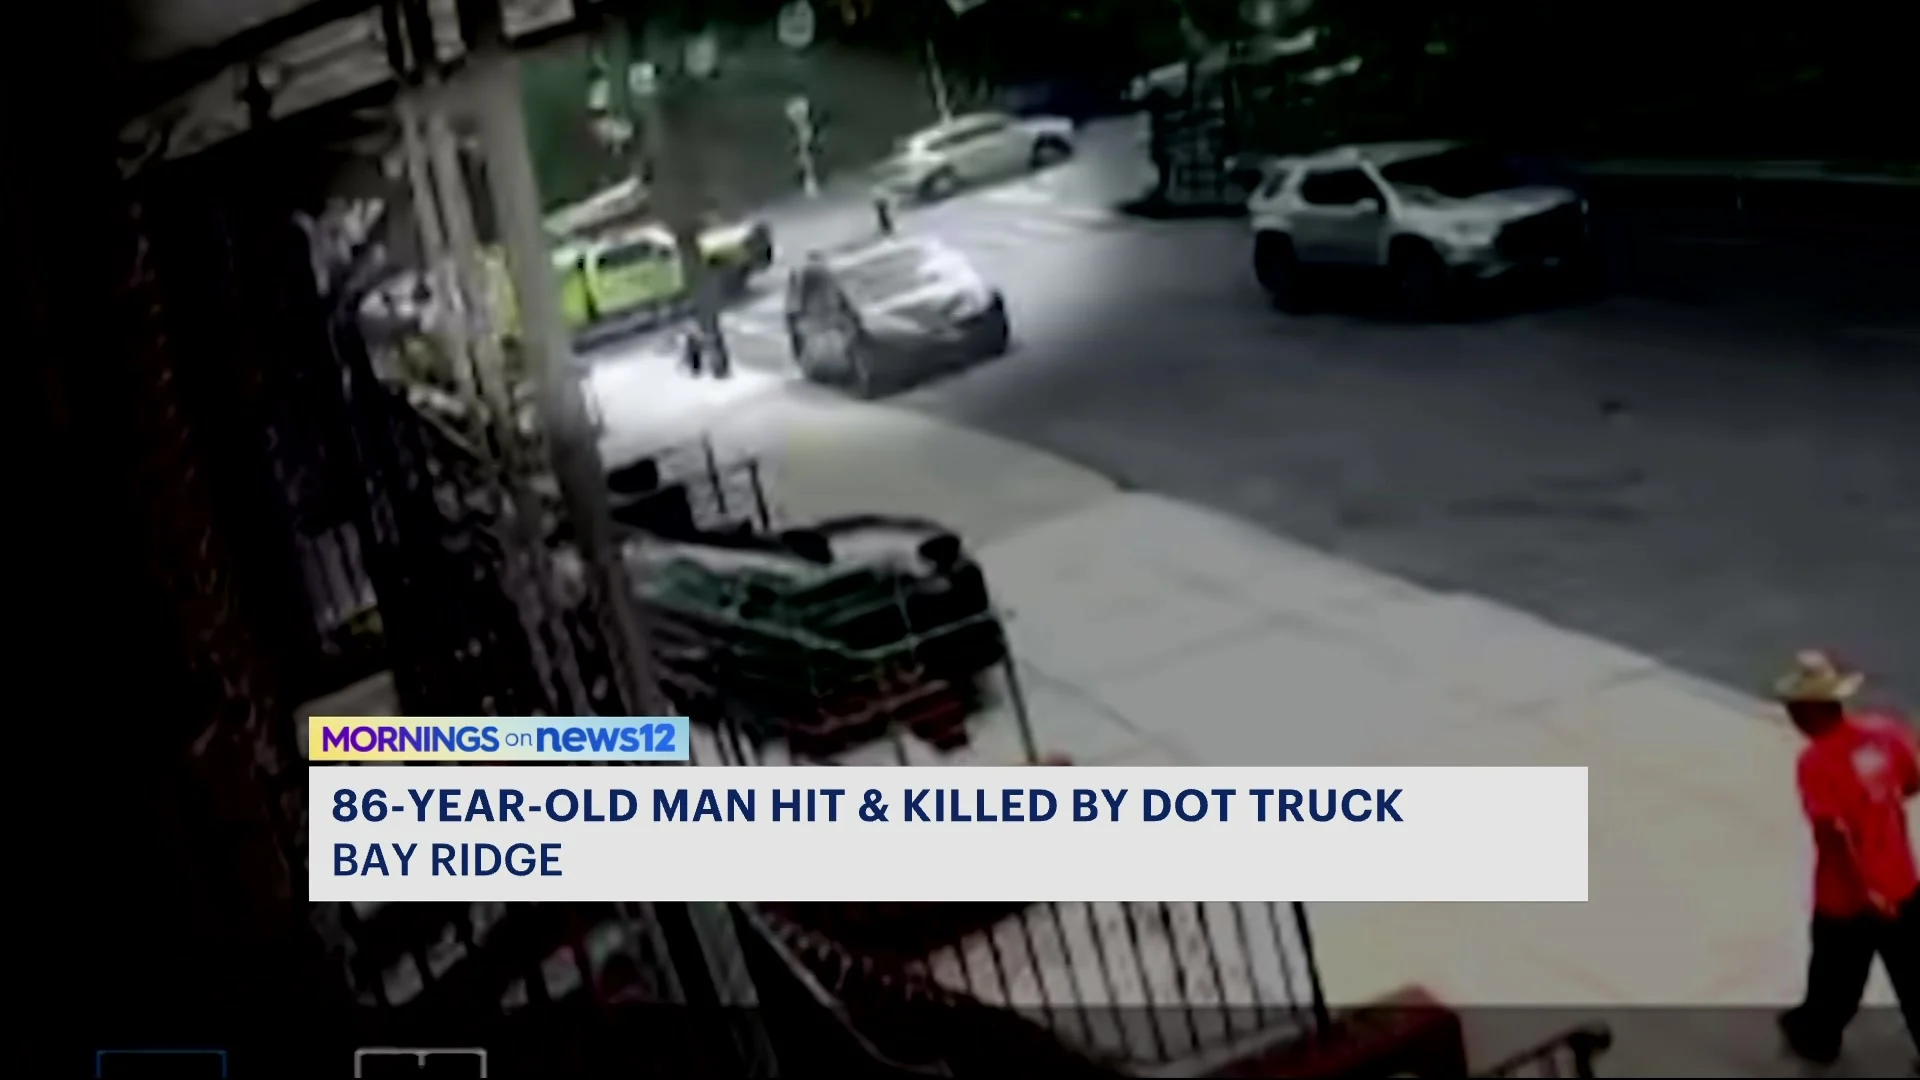 NYPD identifies 86-year-old man fatally struck by DOT truck in Bay Ridge – News 12 Brooklyn